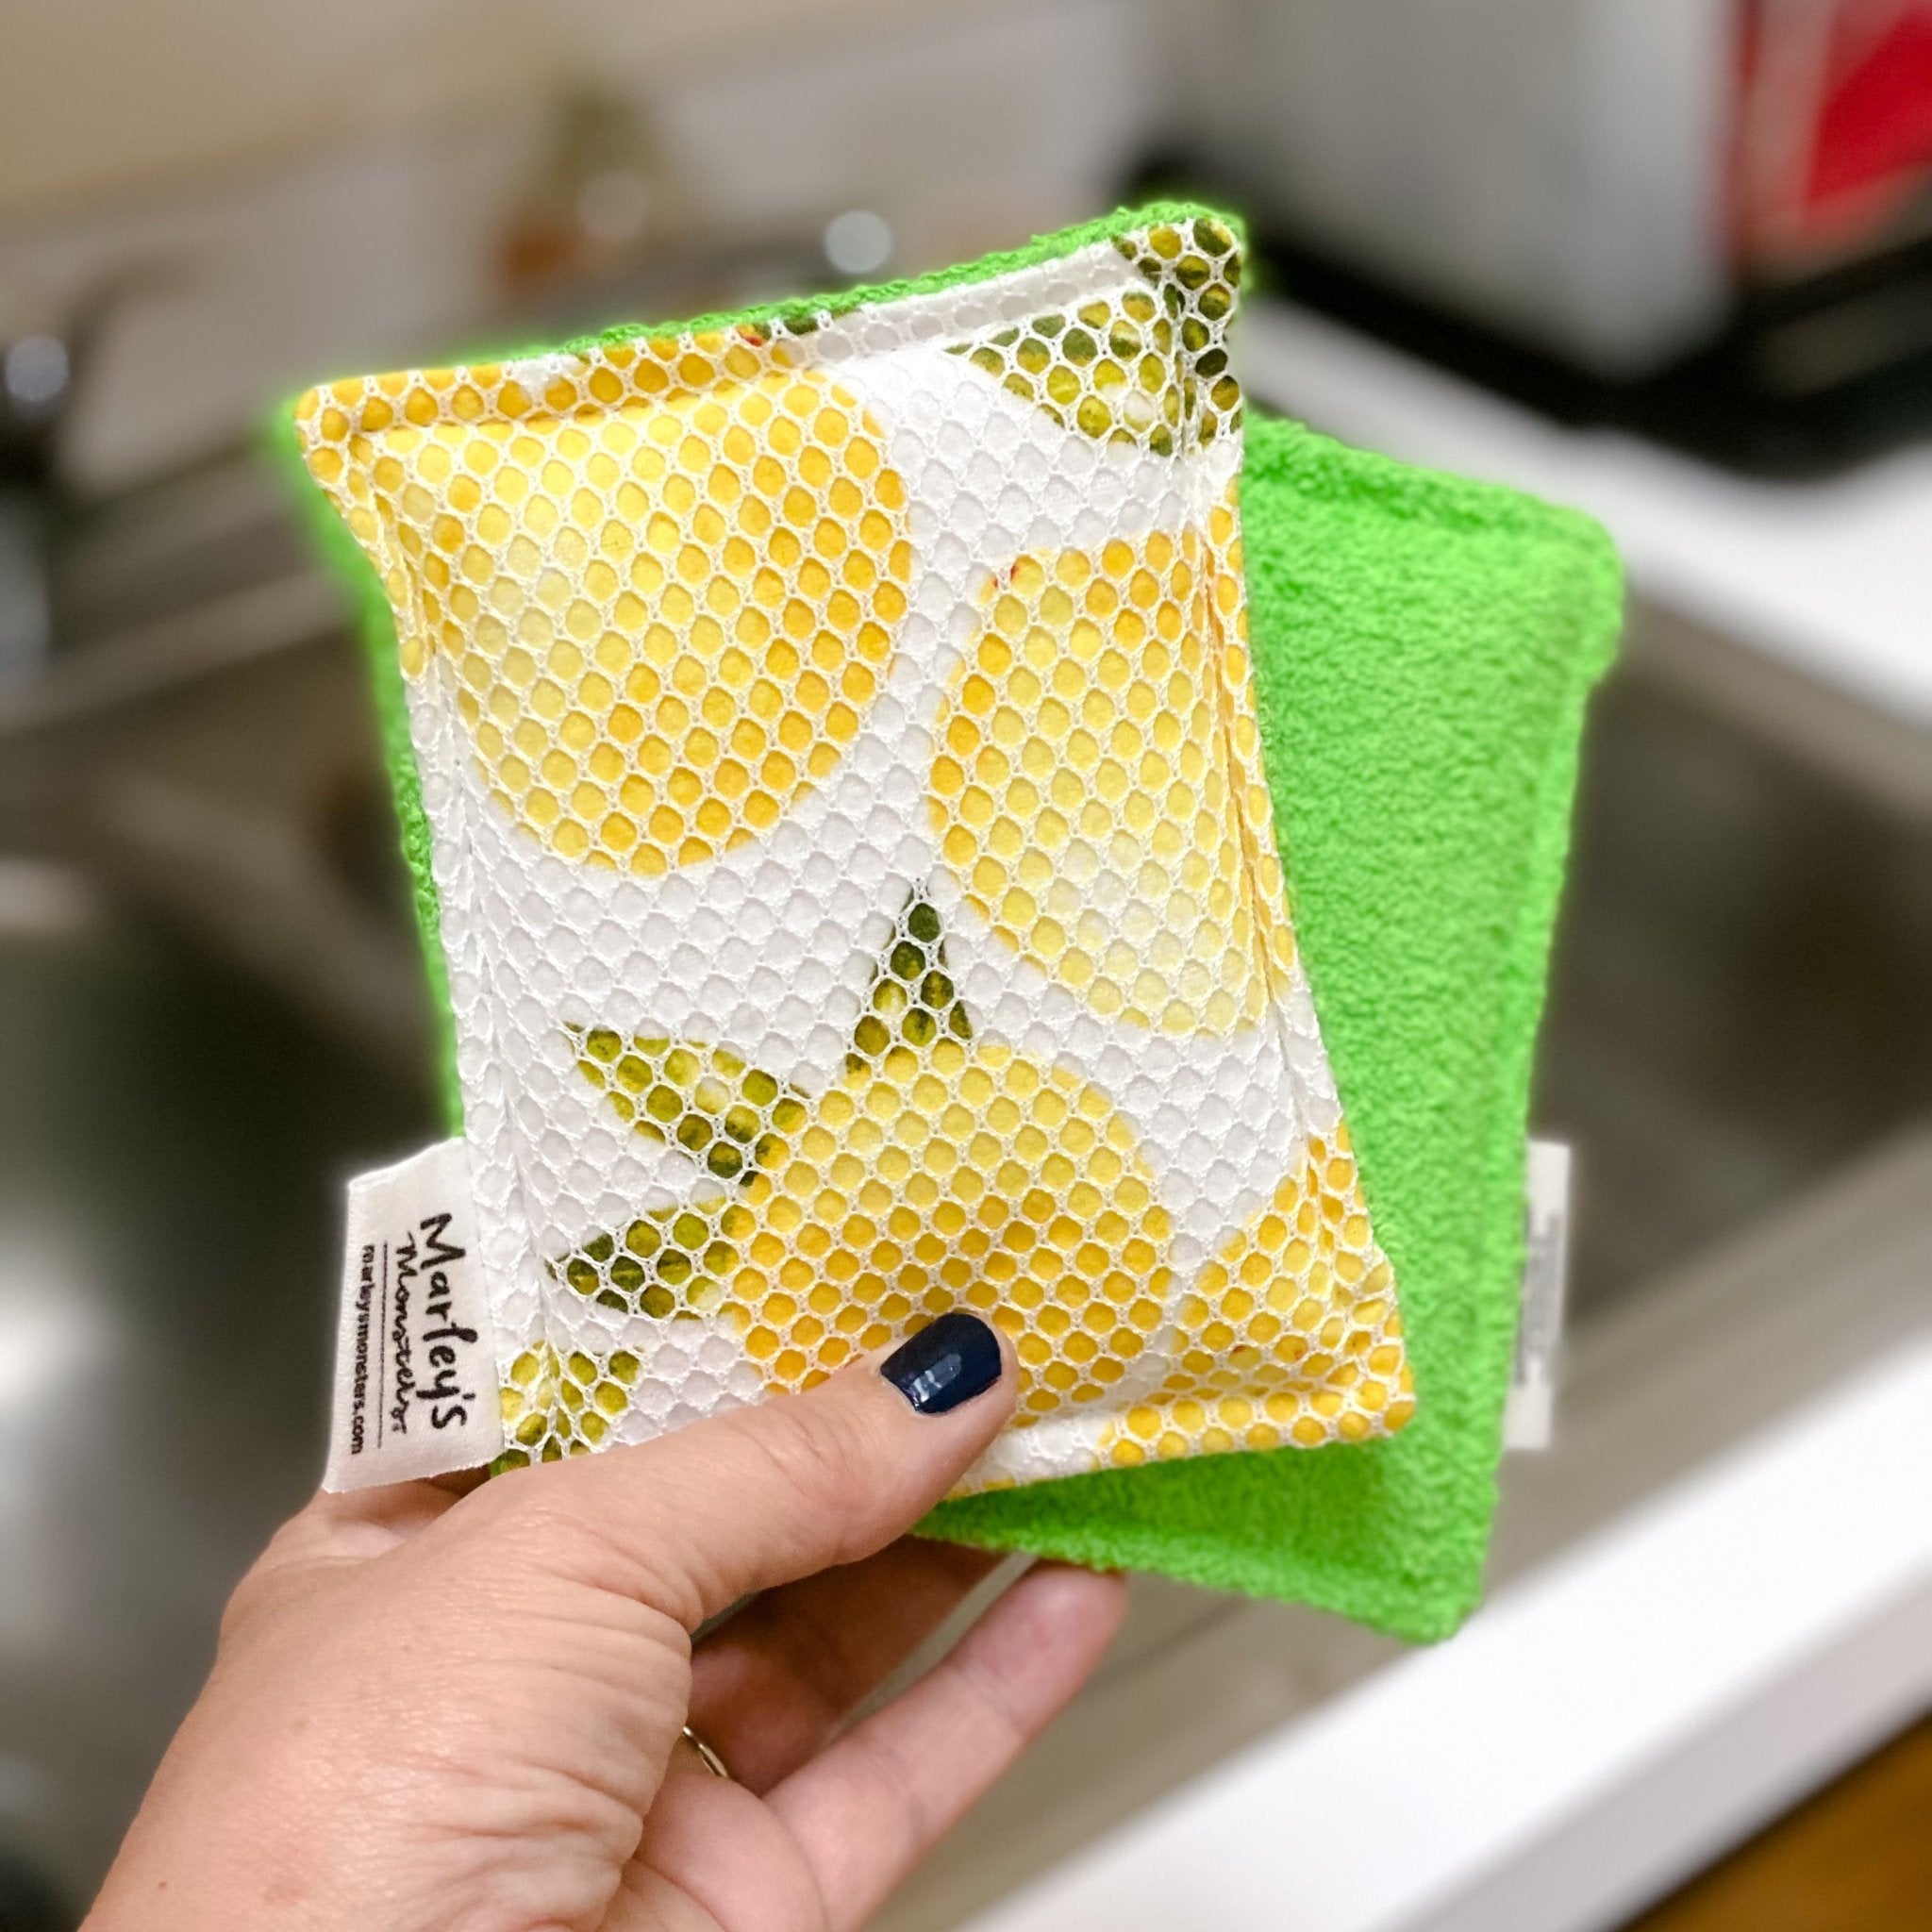 The sustainable dish sponge, Reusable